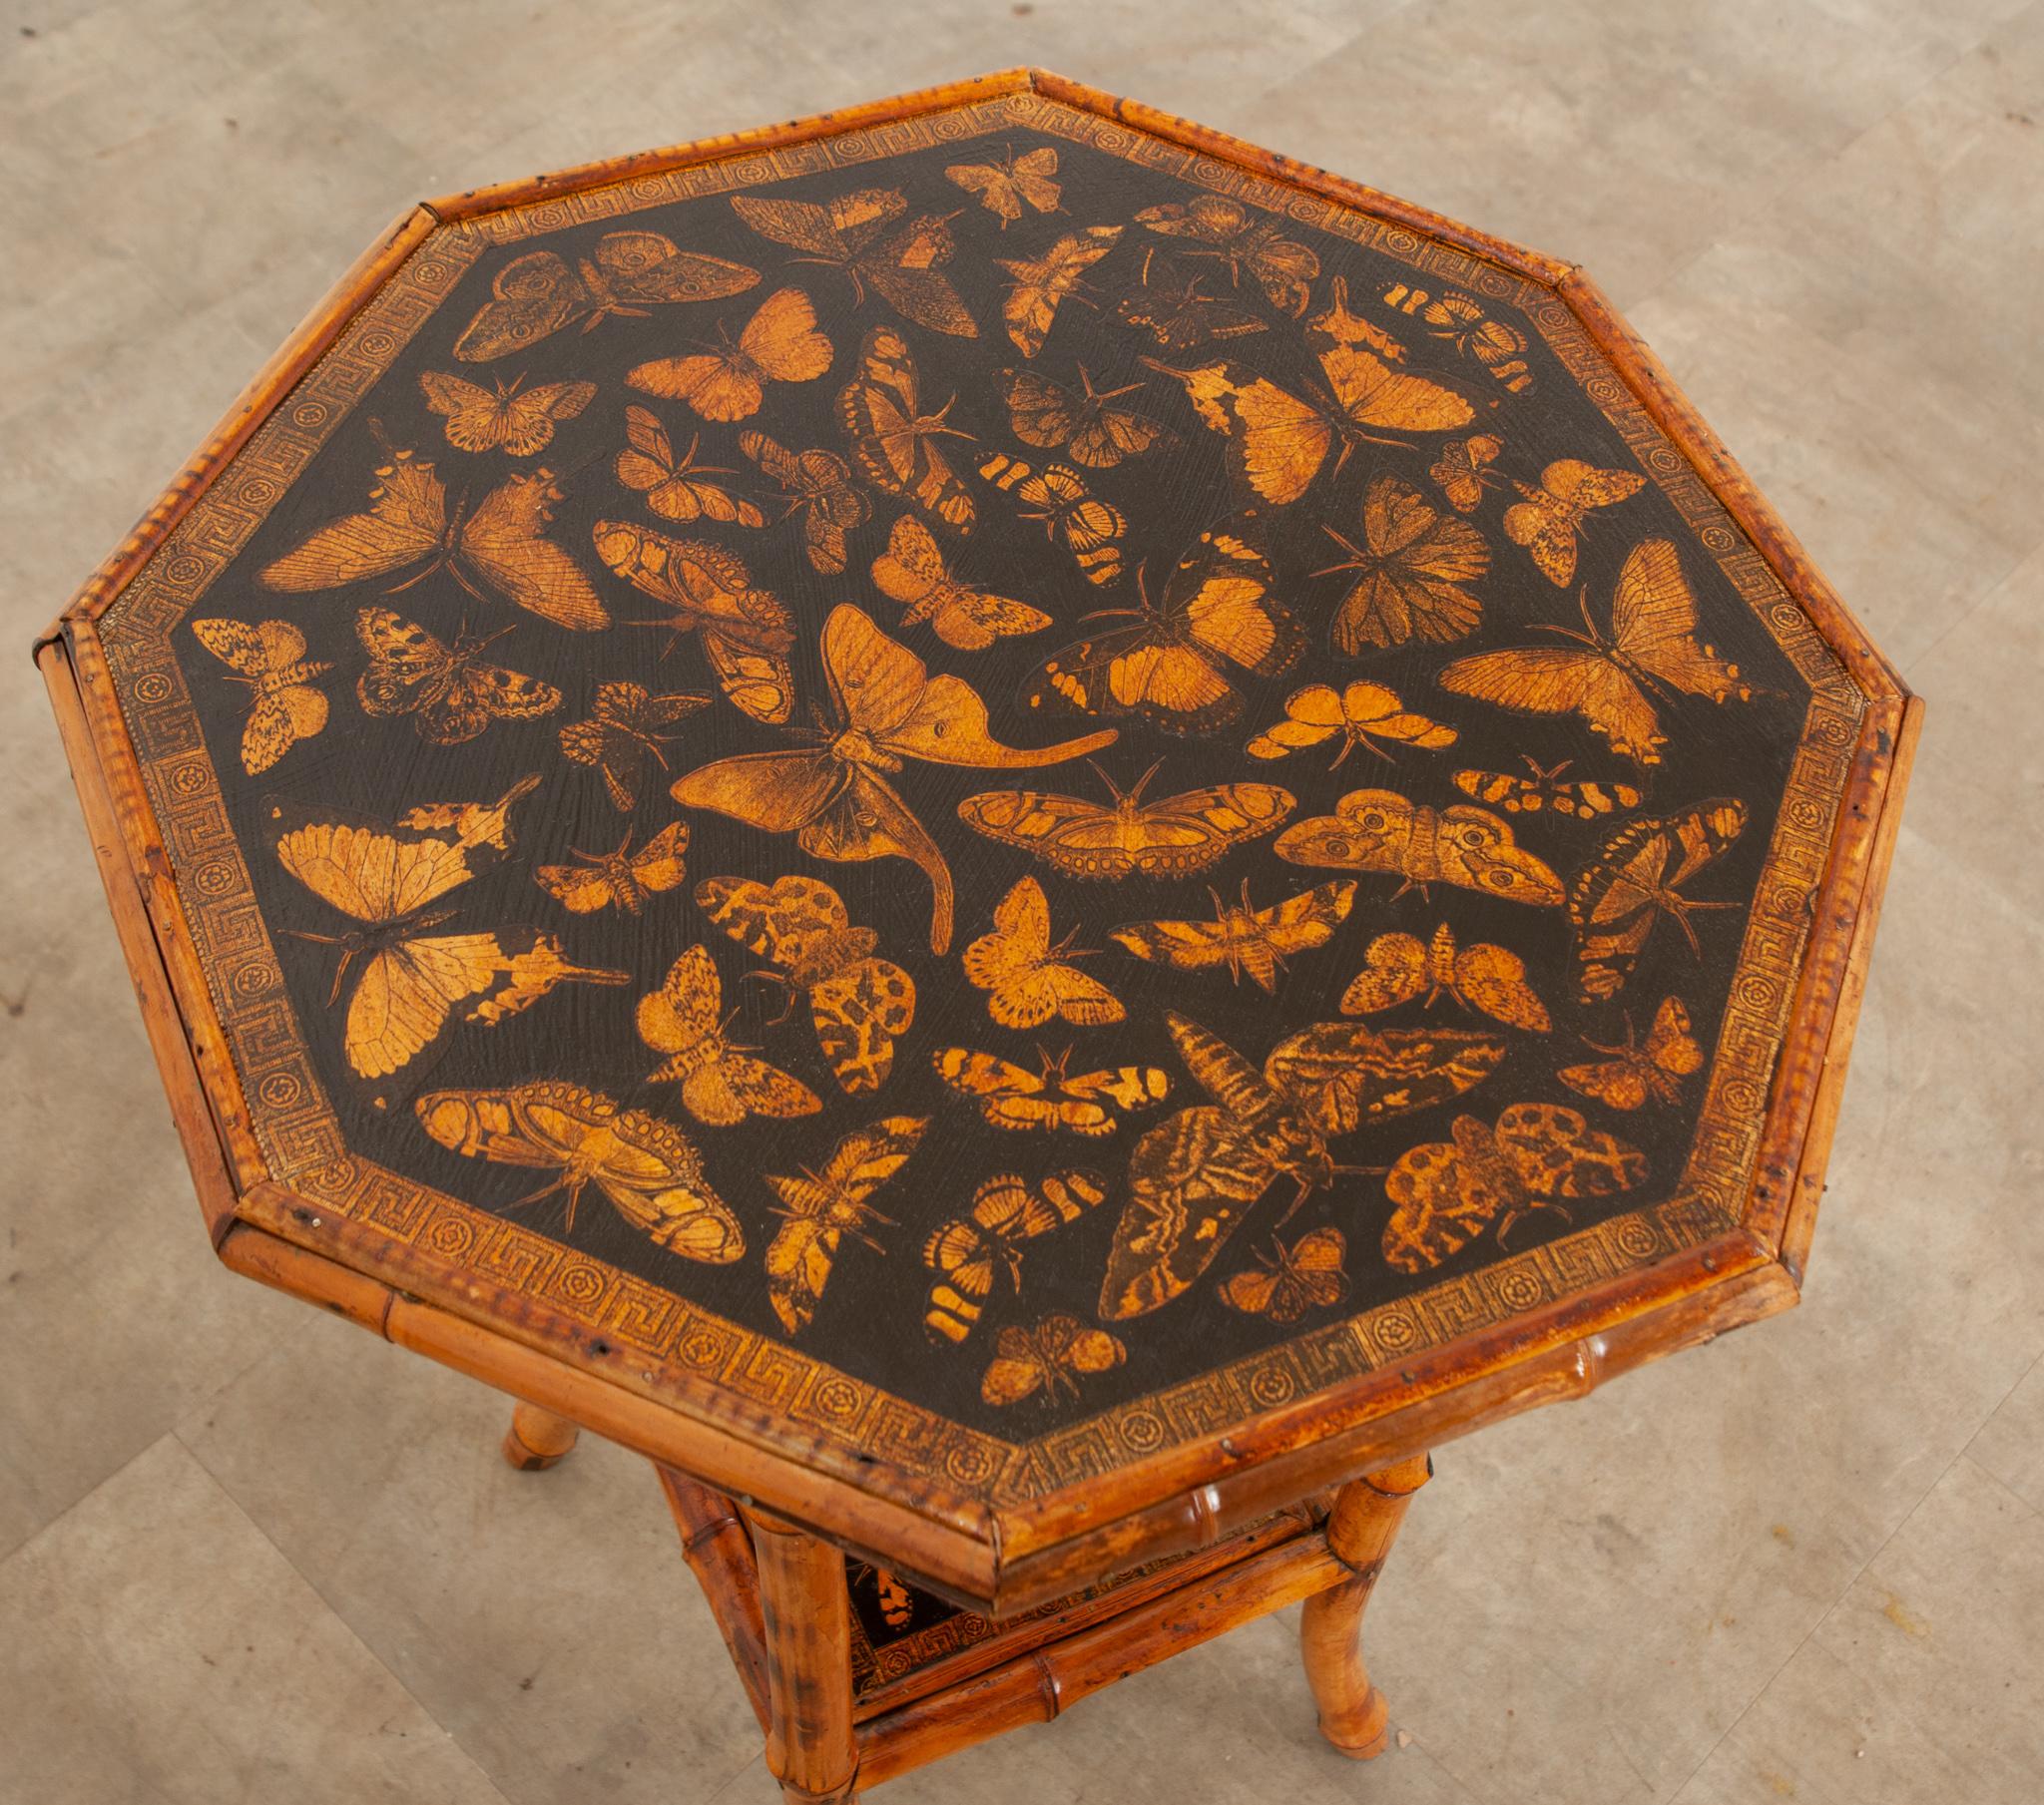 19th Century English Decoupage Bamboo Table